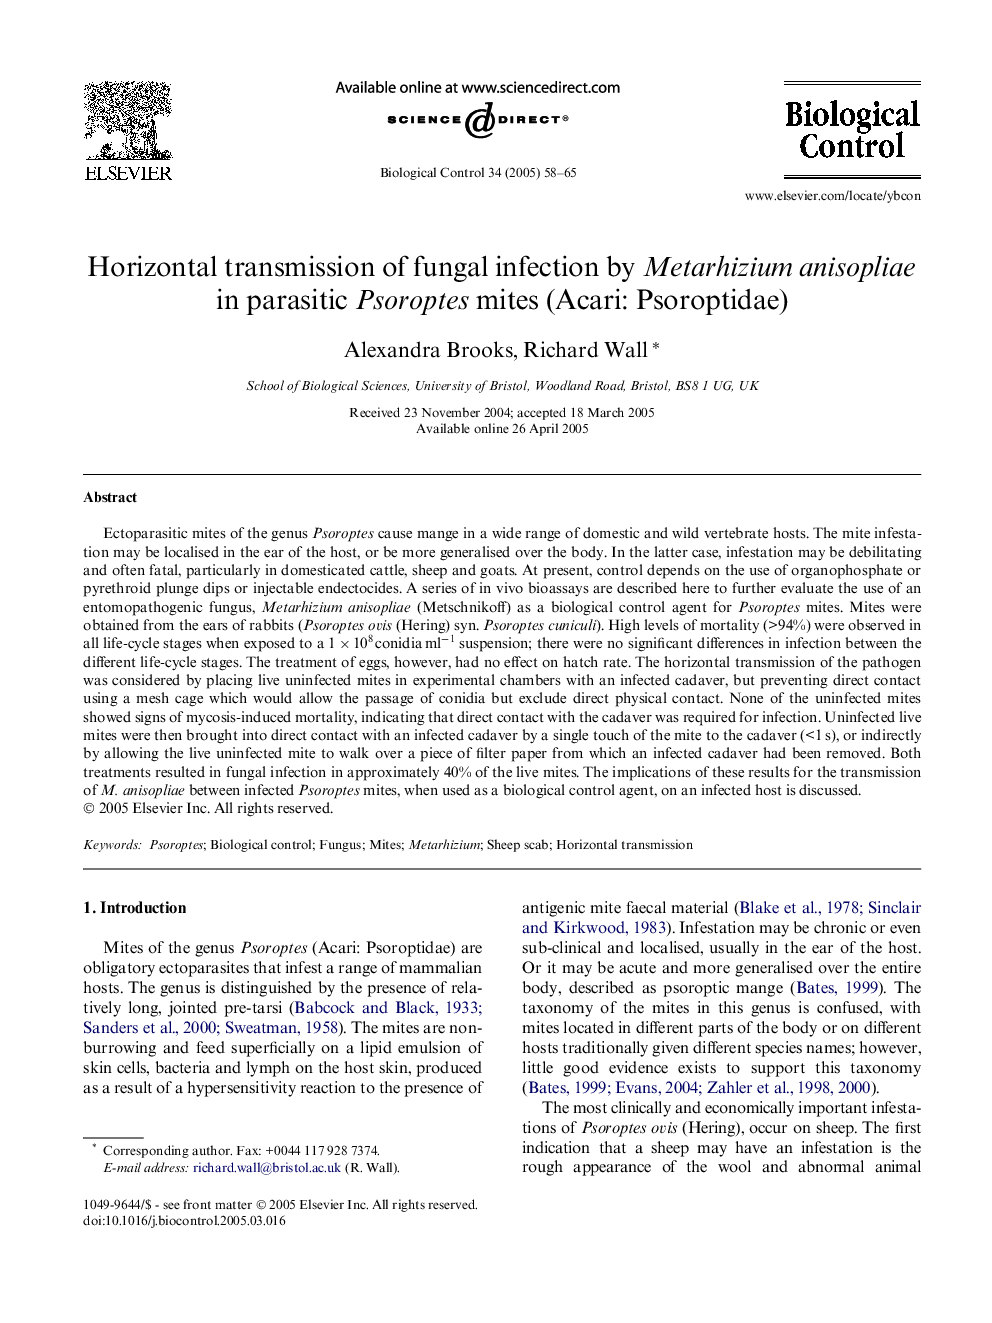 Horizontal transmission of fungal infection by Metarhizium anisopliae in parasitic Psoroptes mites (Acari: Psoroptidae)